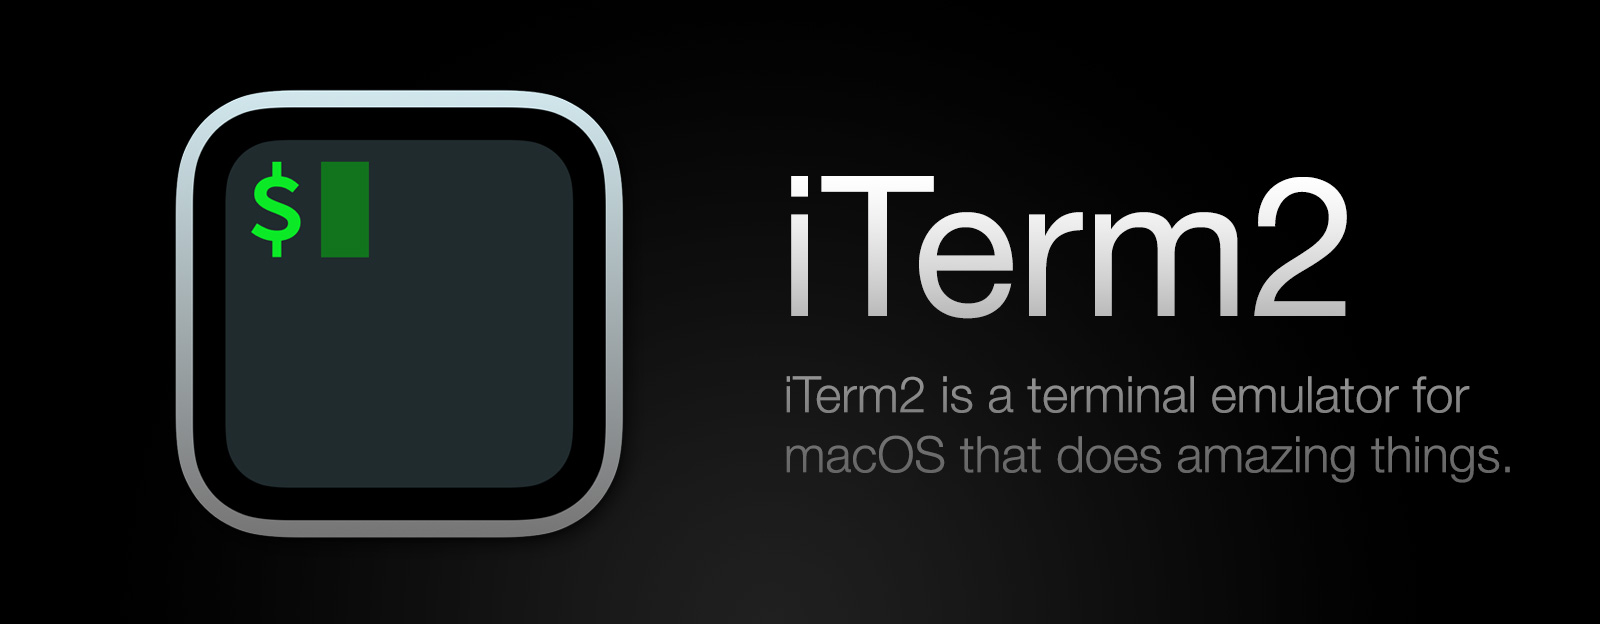 mac terminal emulator icon